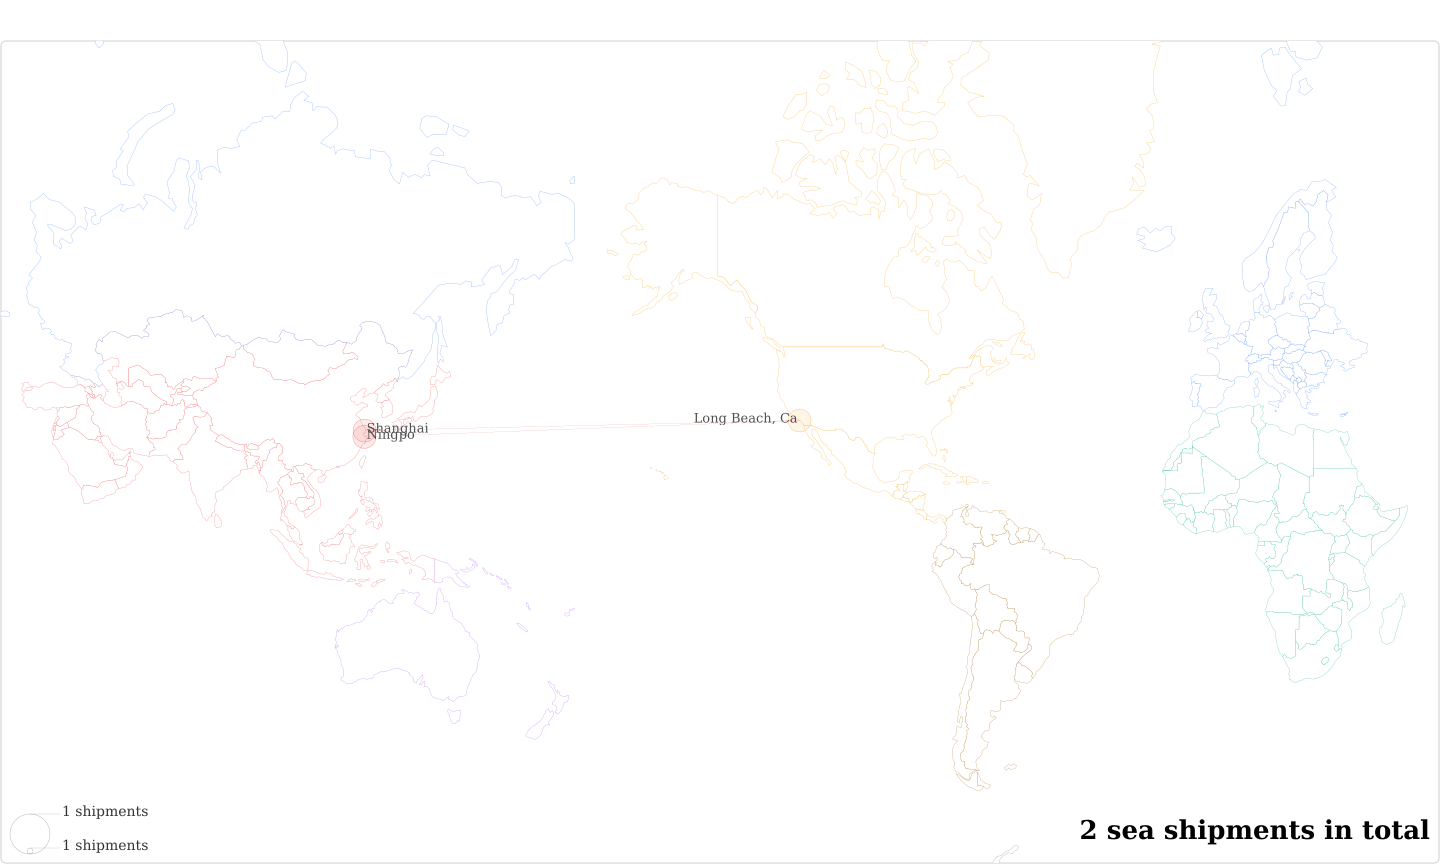 Brandi Love's Imports Per Country Map